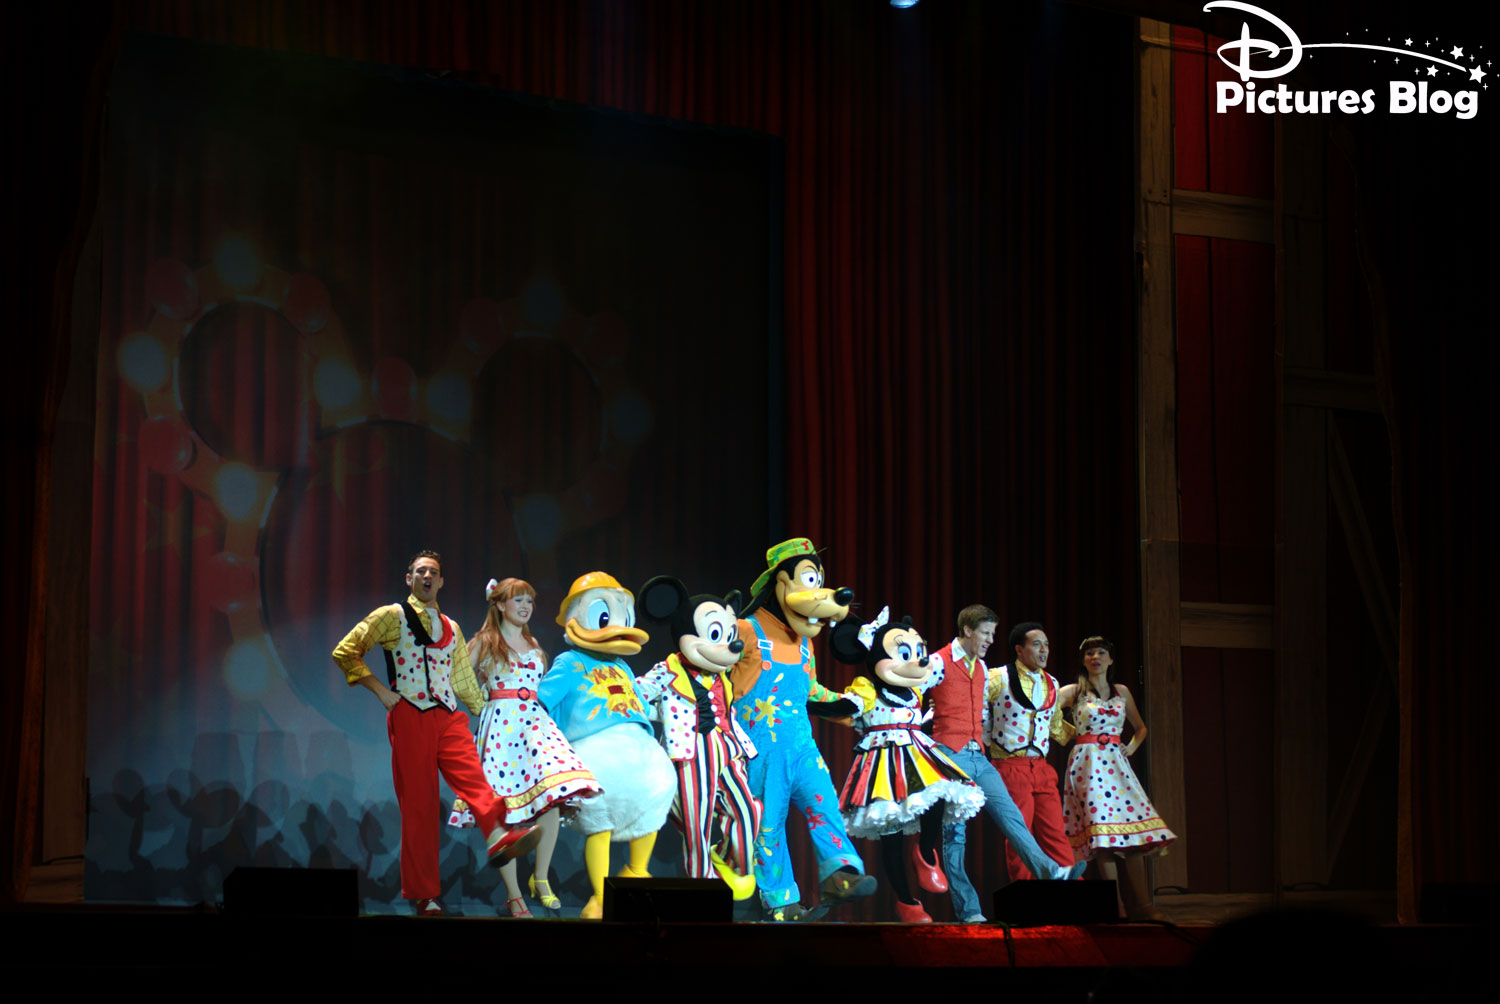 [Disney Live!] La Fabuleuse Tournée de Mickey (2009) - En France en 2012 ! Mod_article42183928_4f4e8ed2445bf